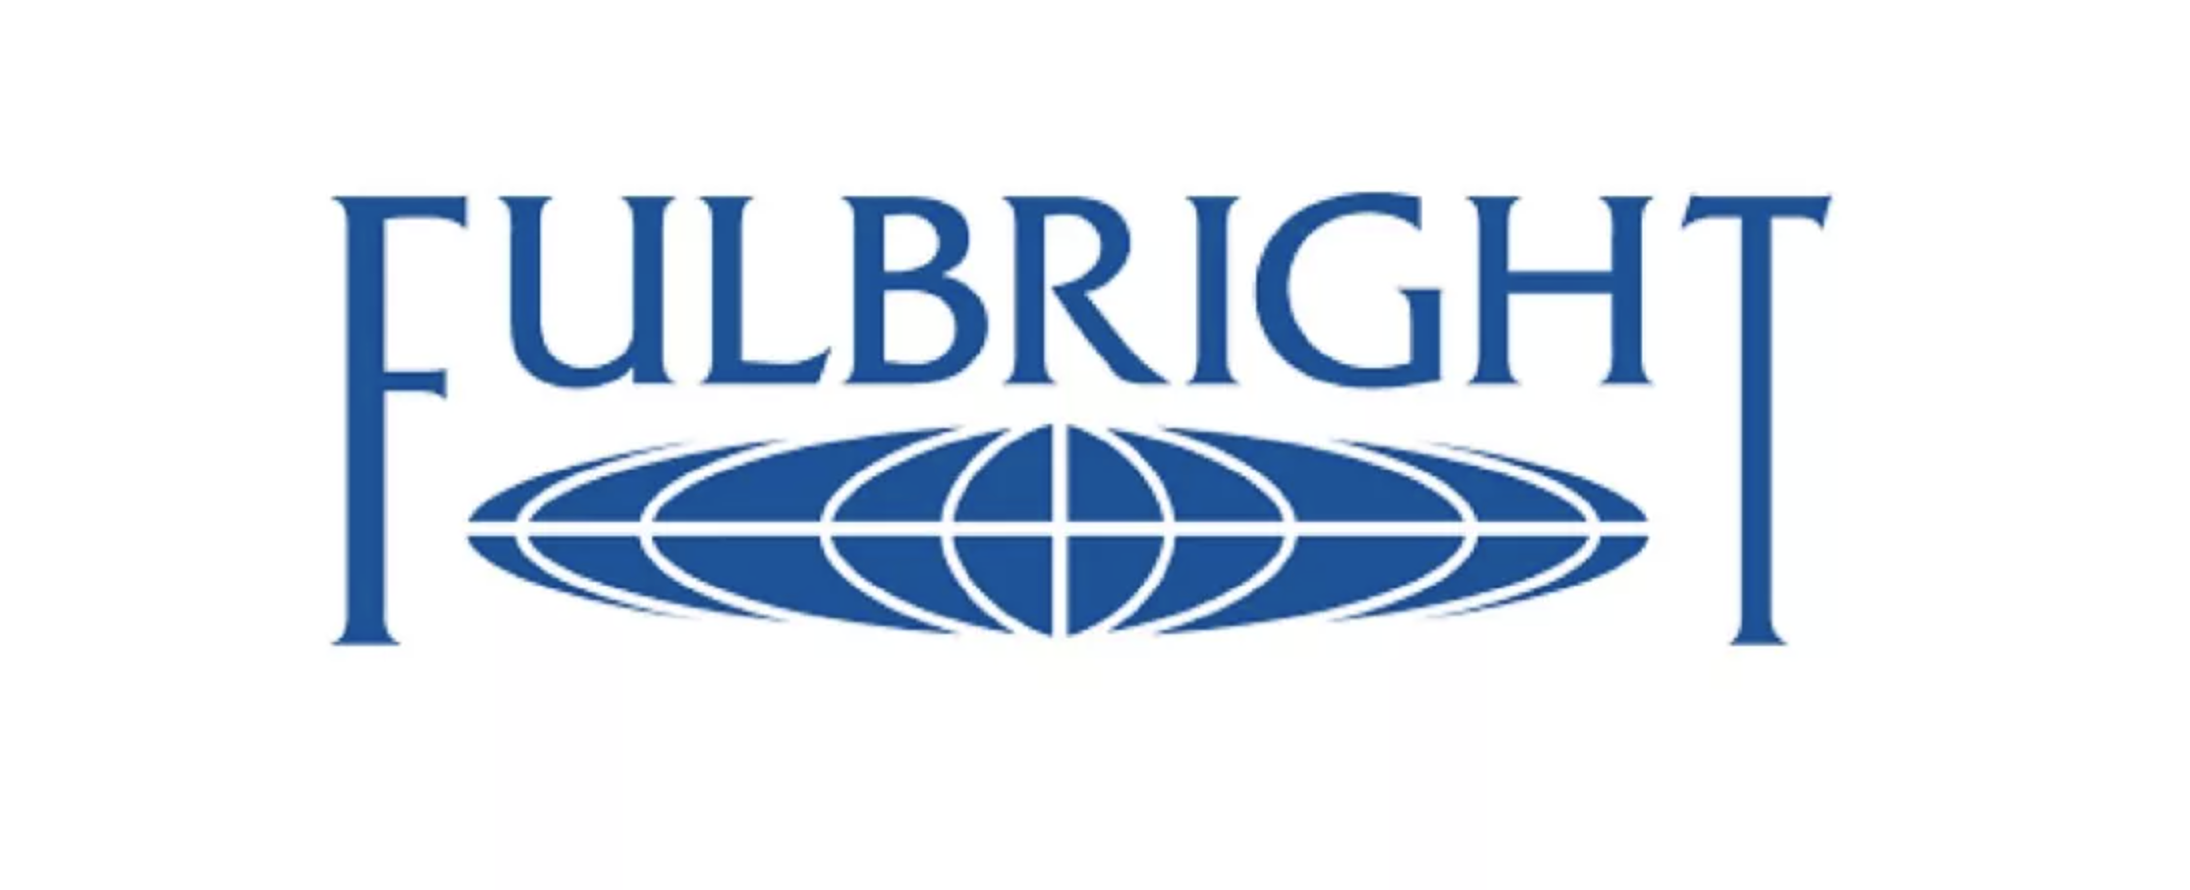 logo-Fulbright